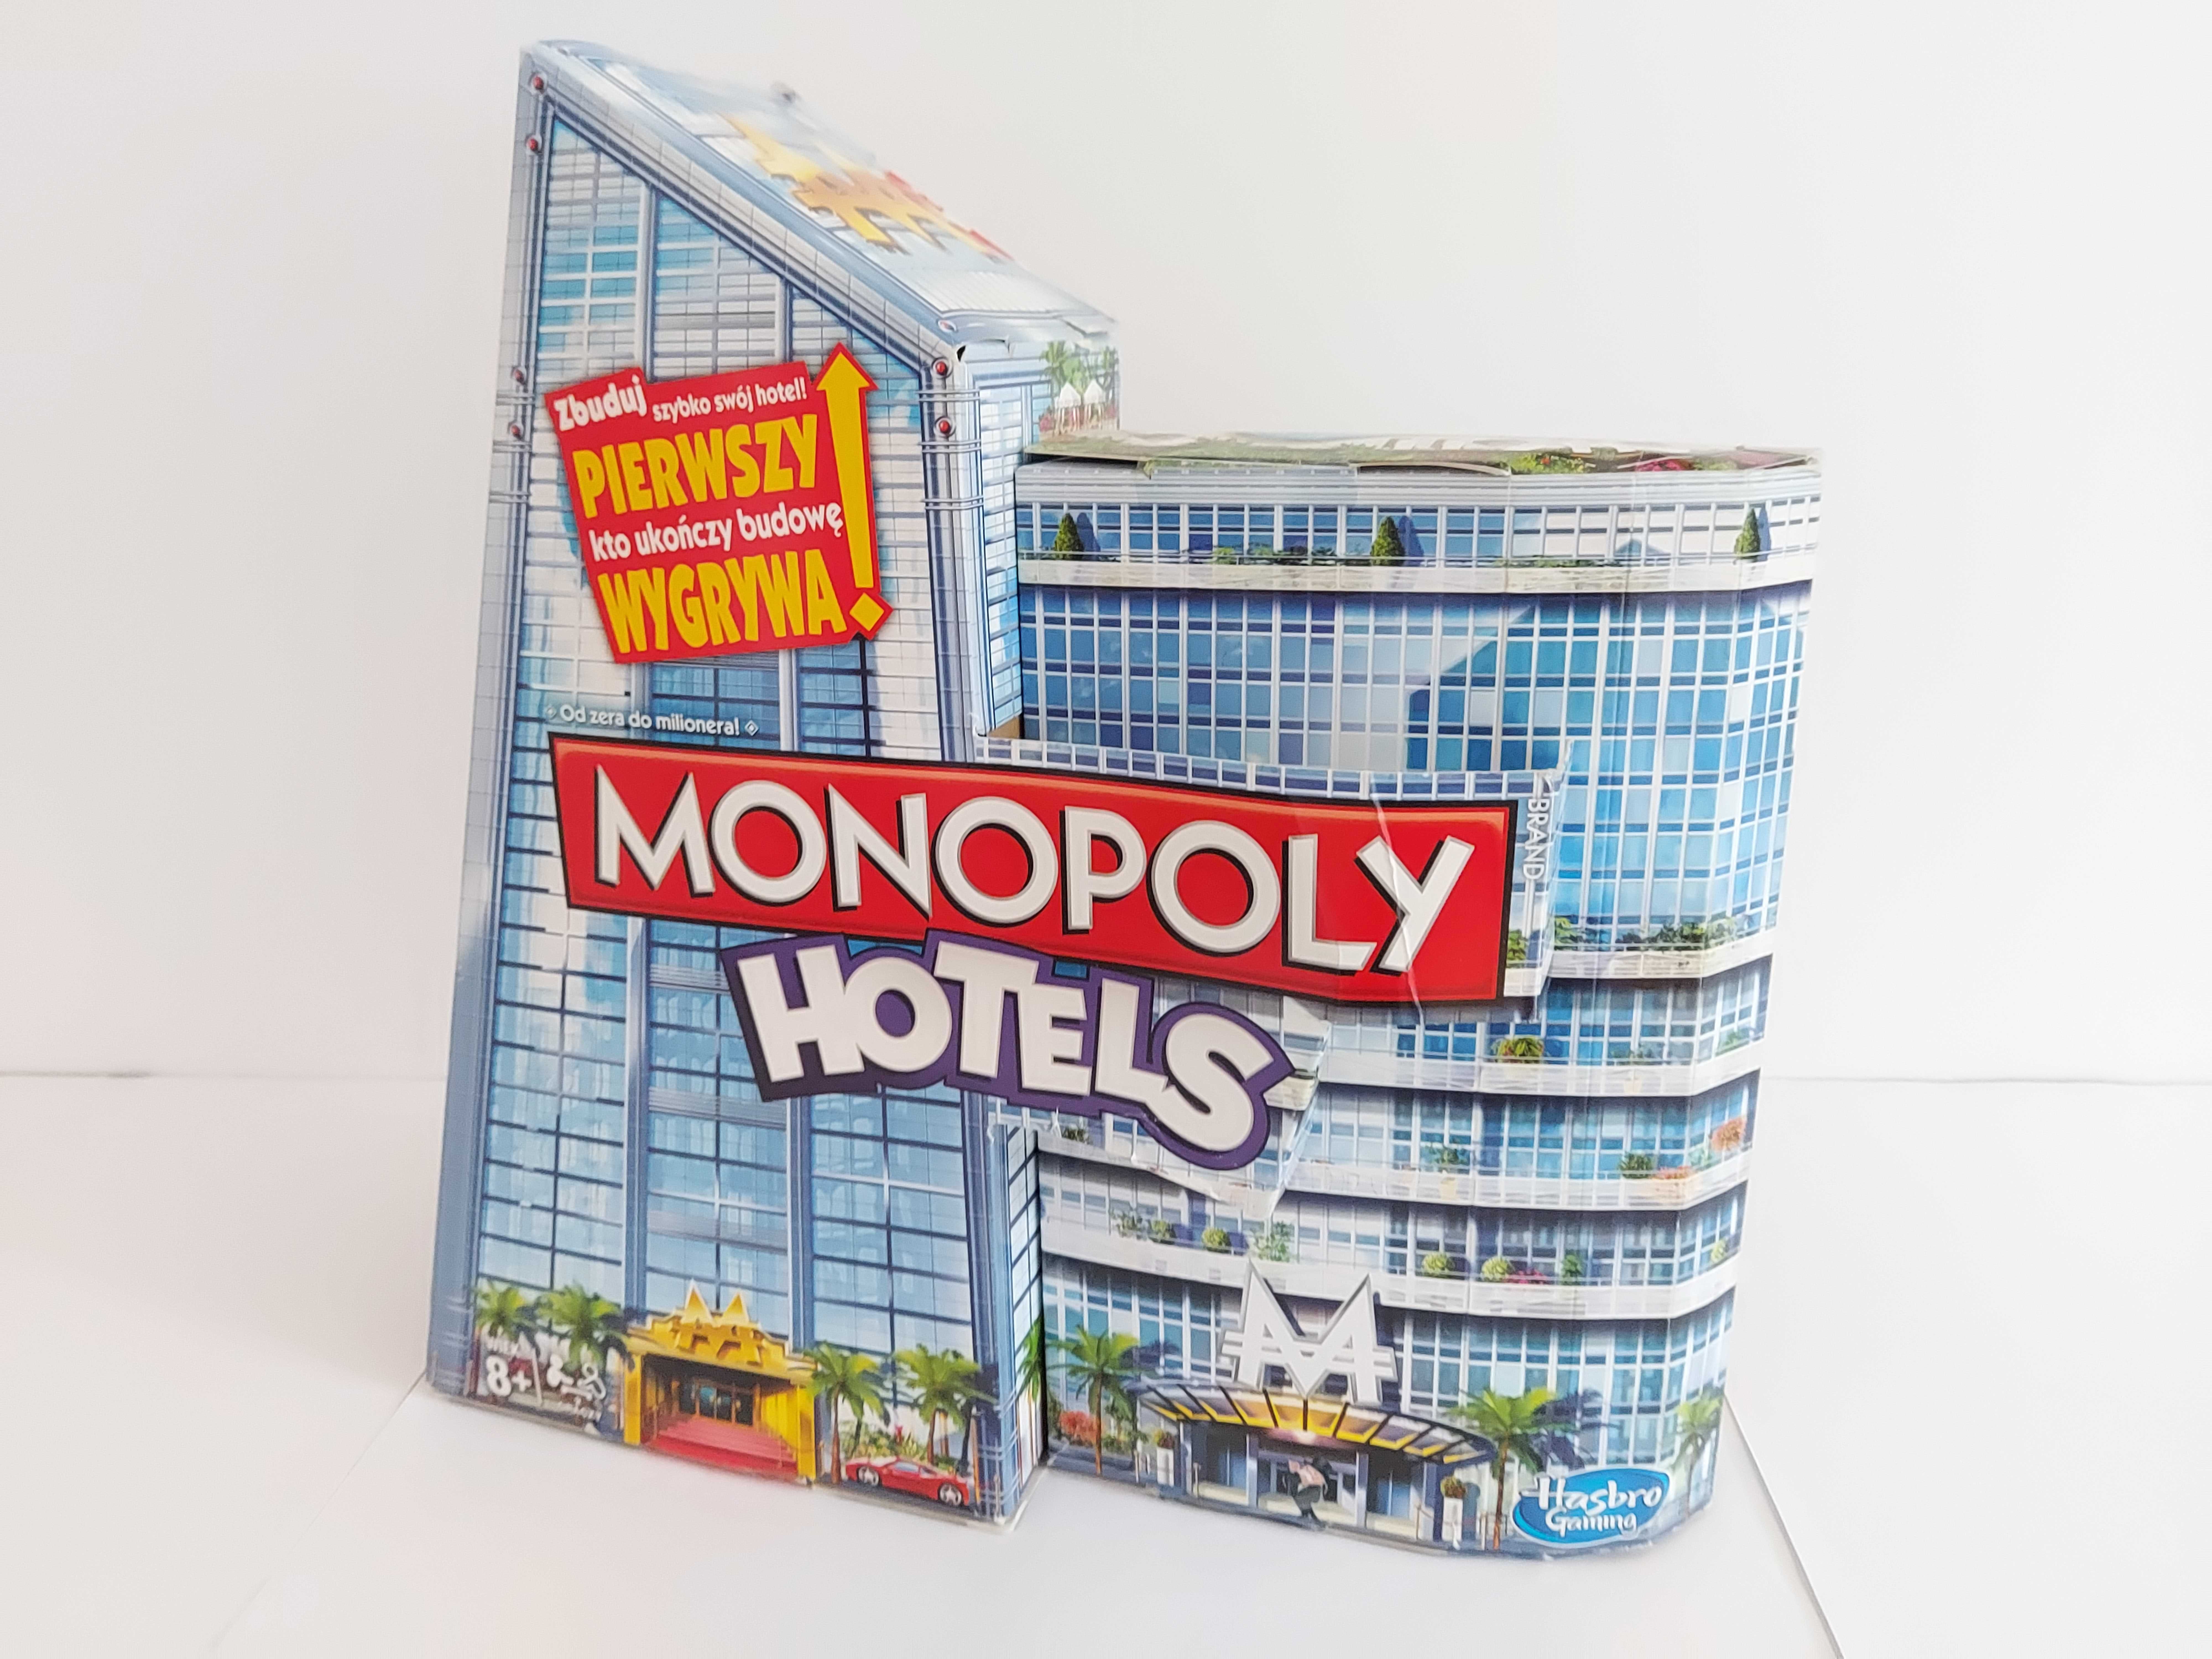 Monopoly Hotels Hasbro